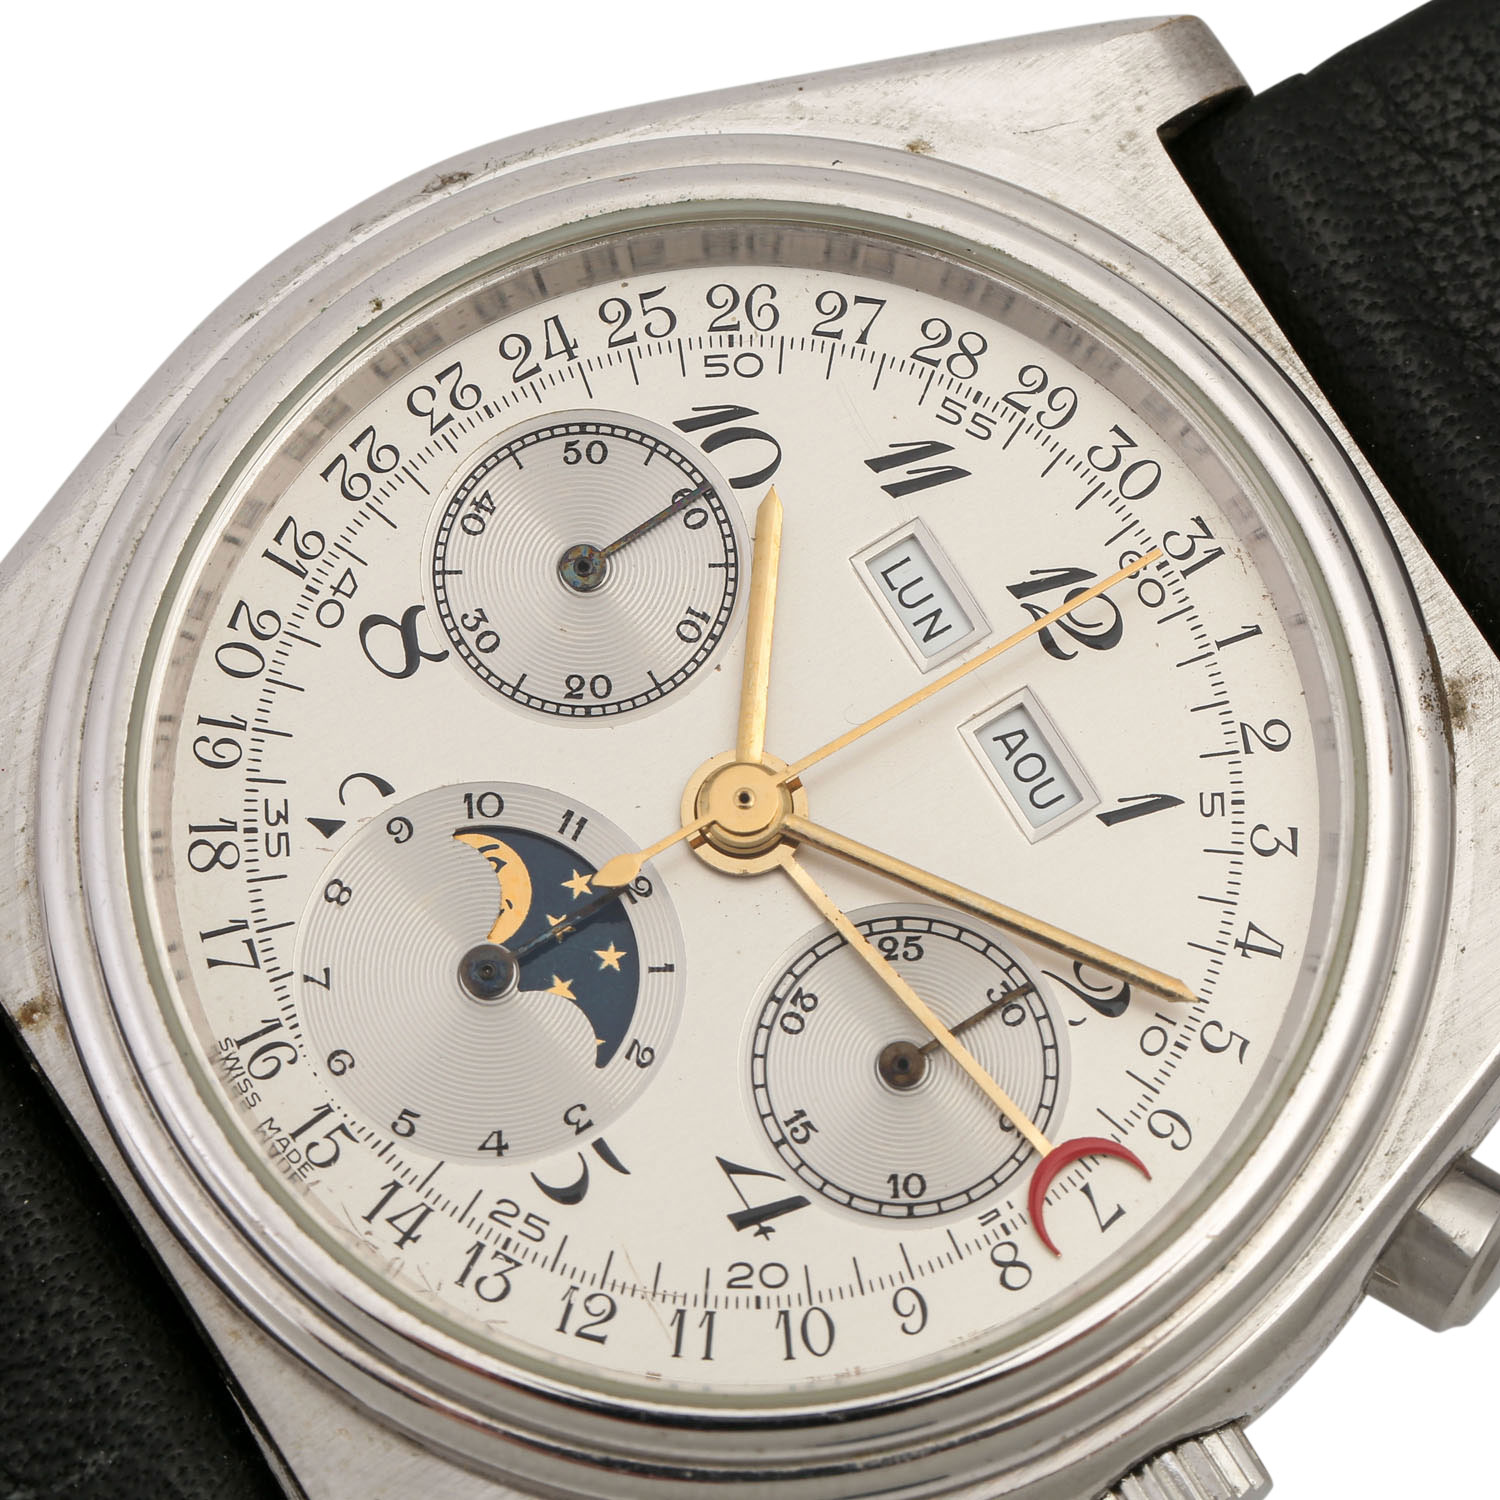 VINTAGE Chronograph mit Tag/Datum und Mondphasen. Armbanduhr. Edelstahl. Handaufzug-We - Image 5 of 5